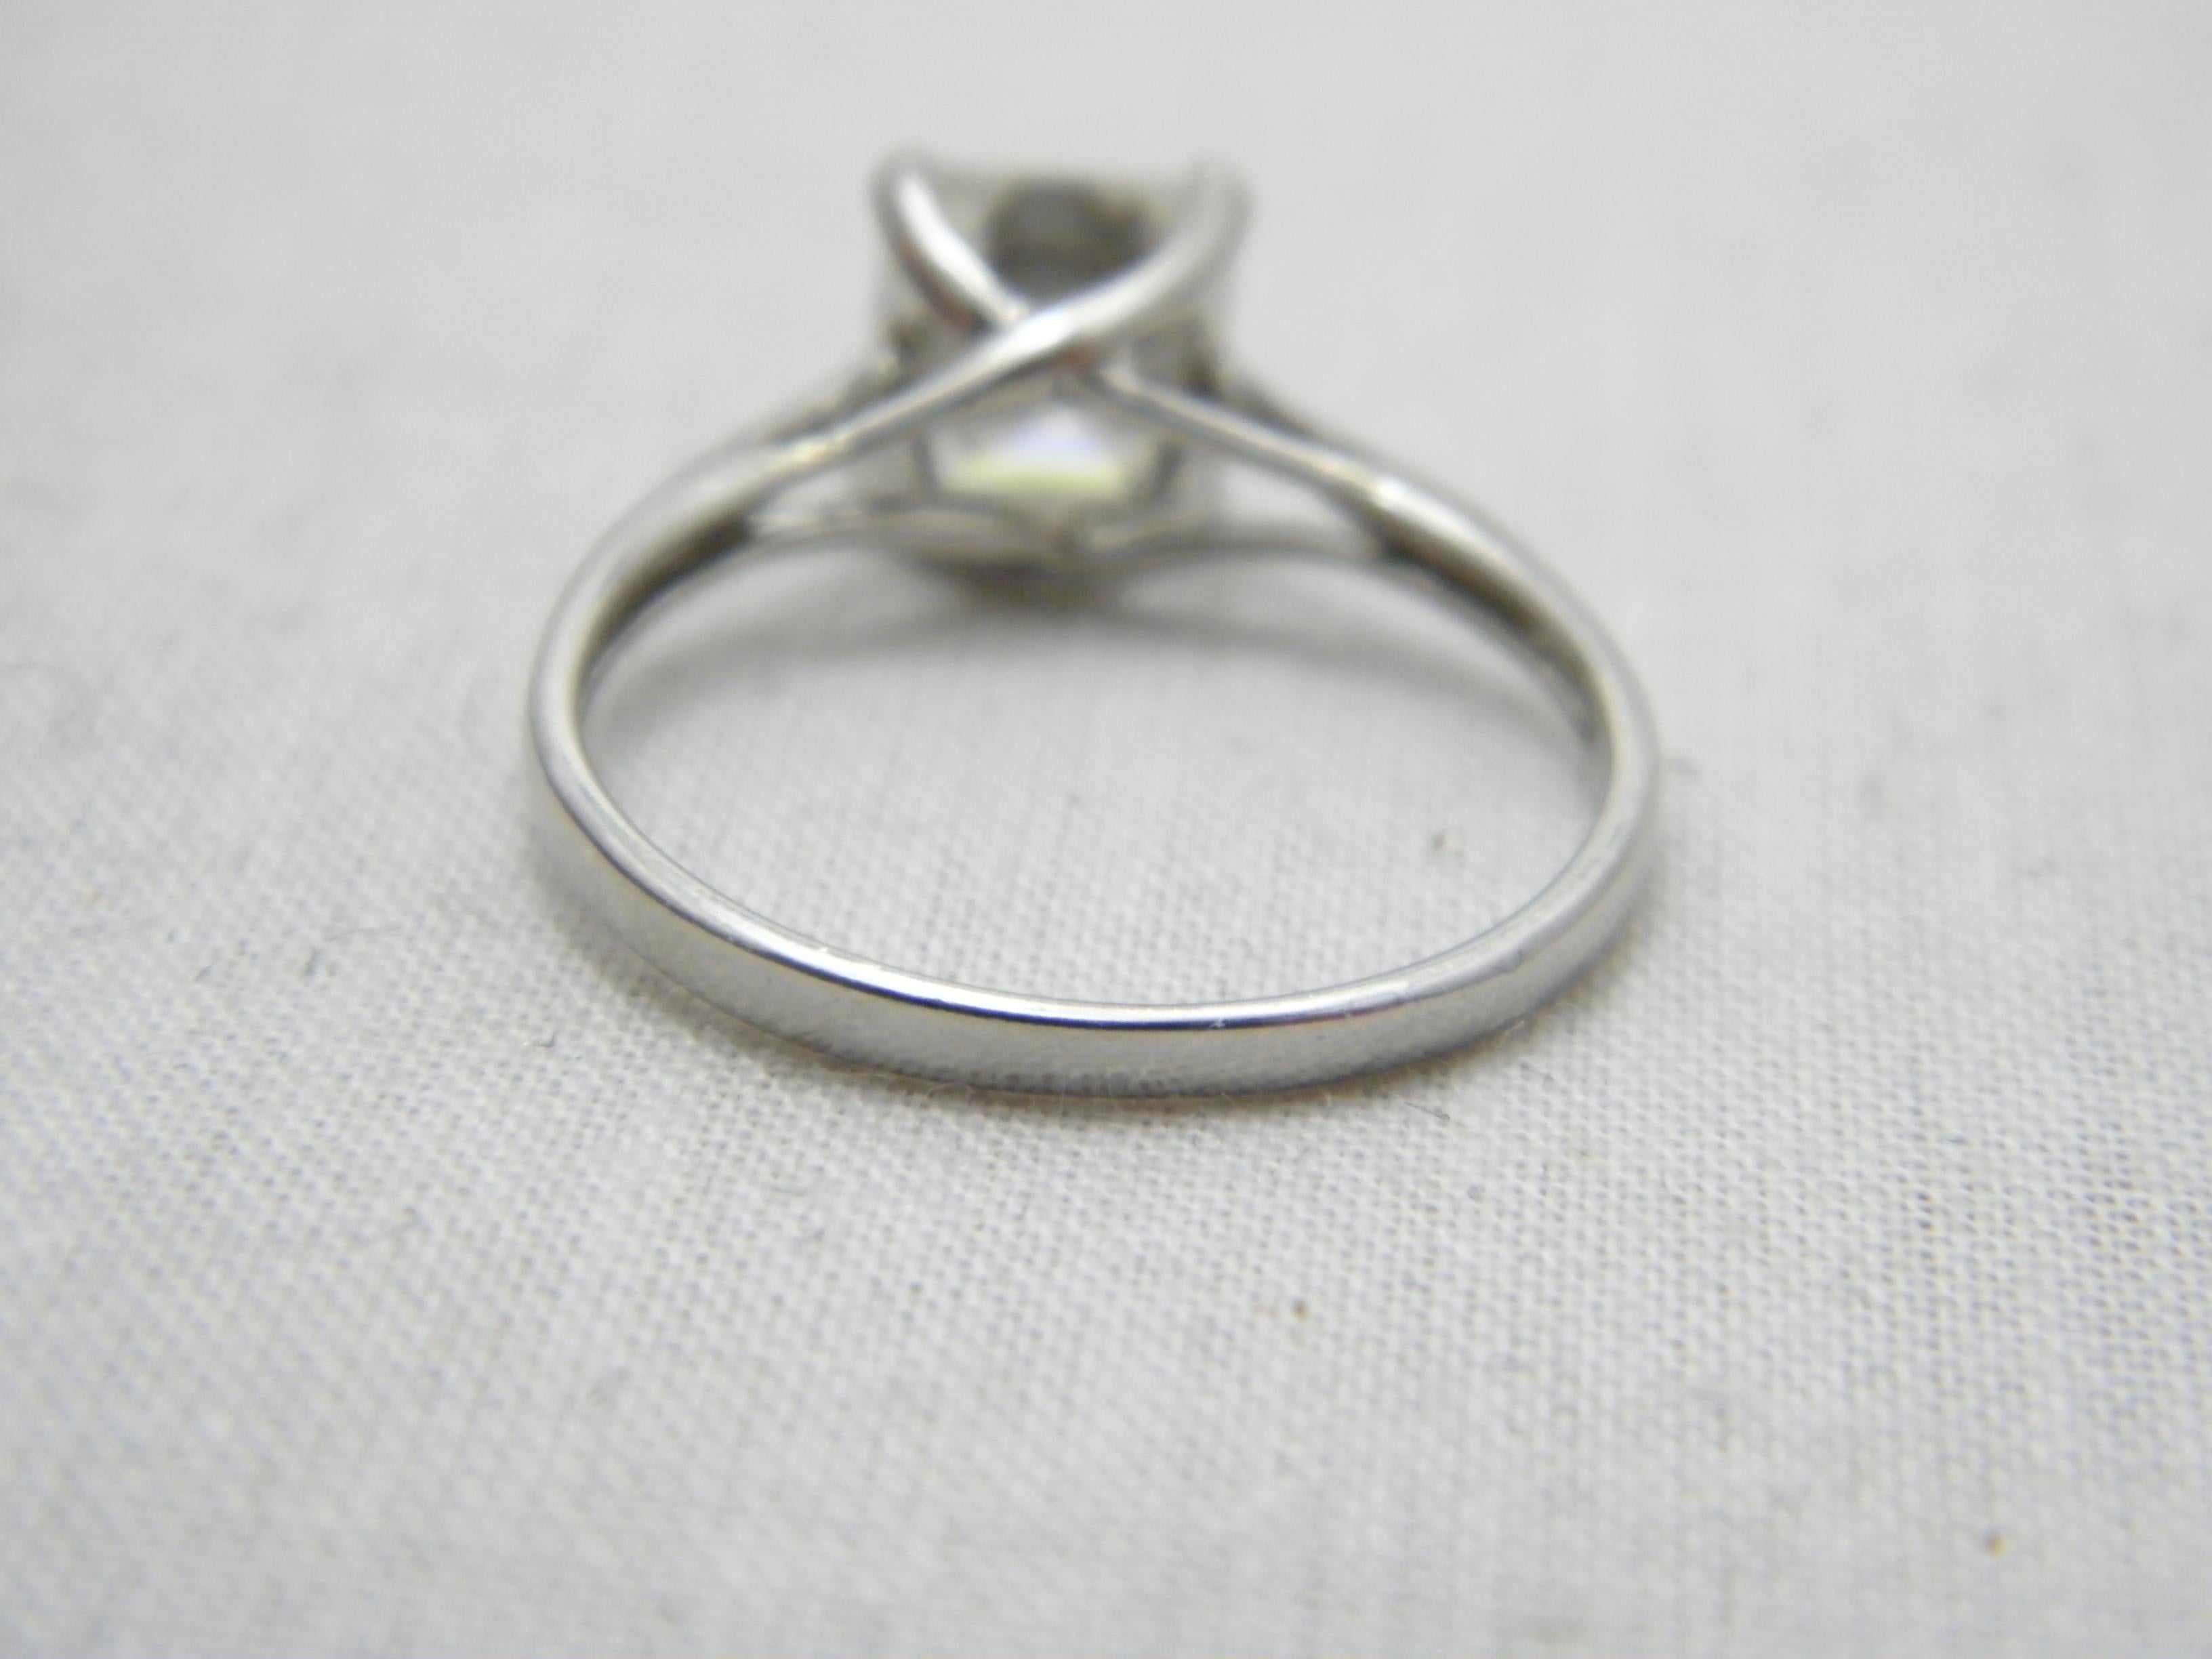 Vintage 14ct White Gold 2.75 Cttw Diamond Solitaire Engagement Ring Size Q 8.25 For Sale 3